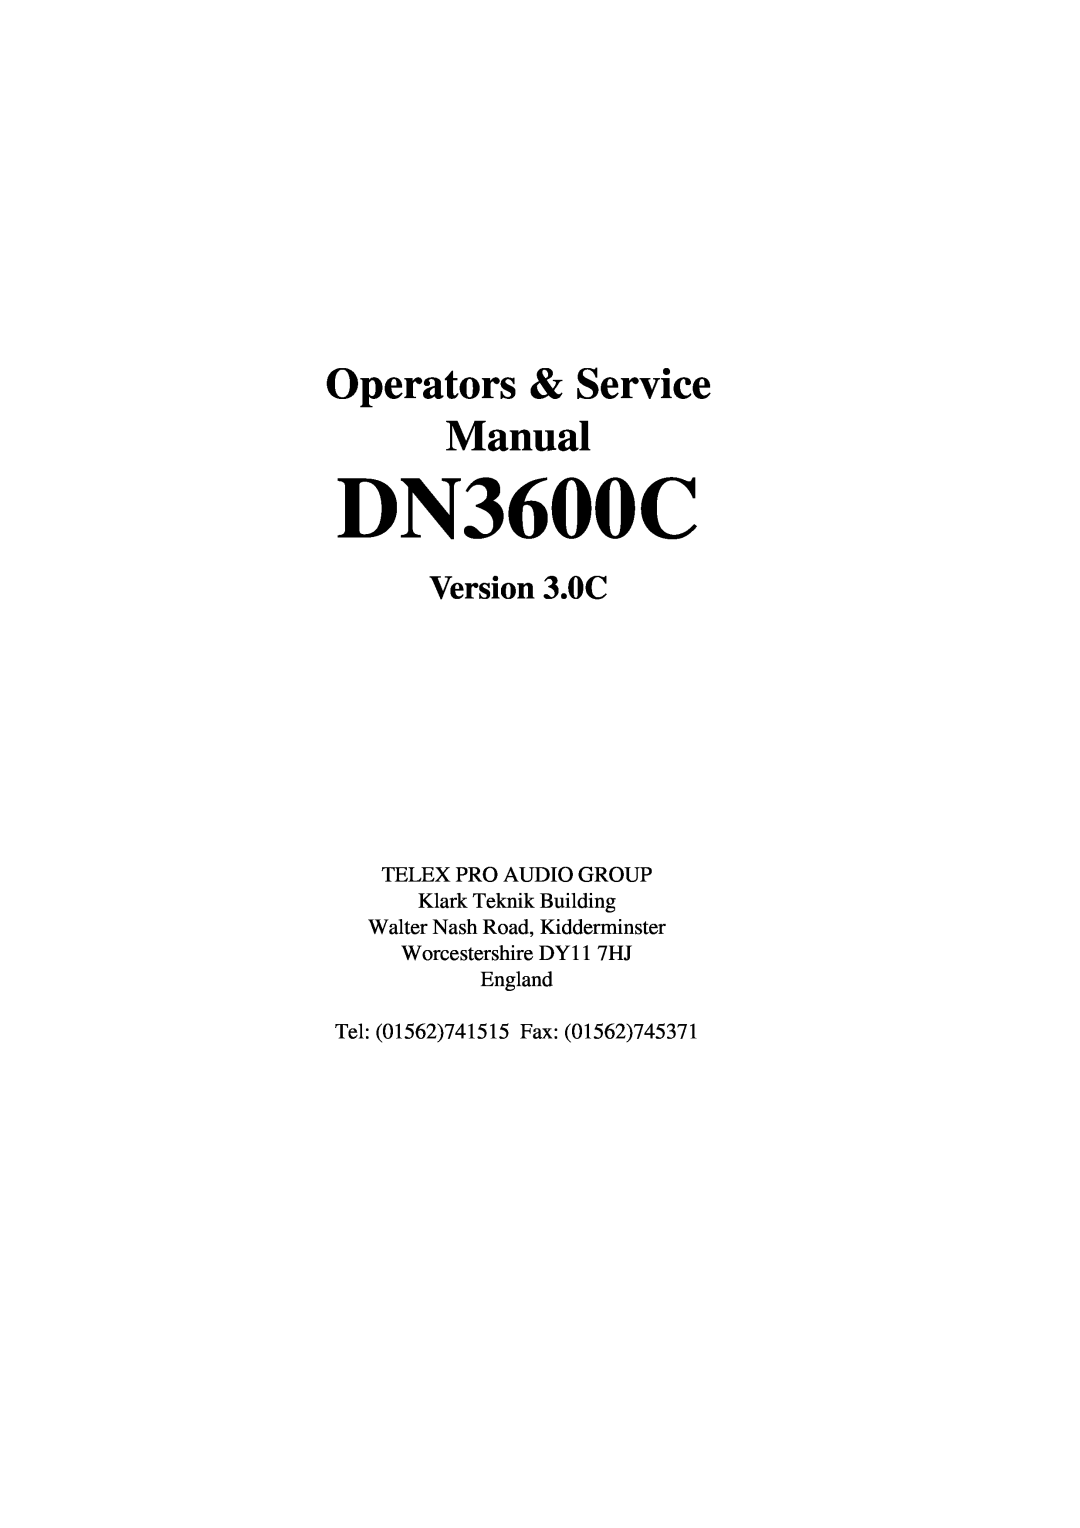 Telex DN3600C service manual Operators & Service, Manual, Version 3.0C 